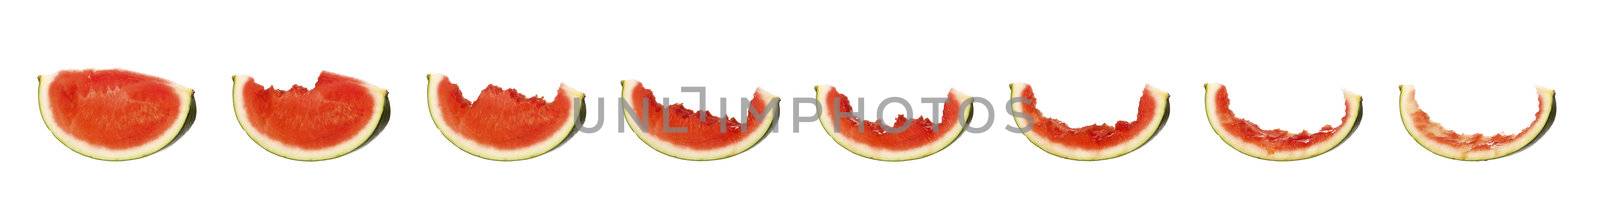 Tasty watermelon in progress by gemenacom